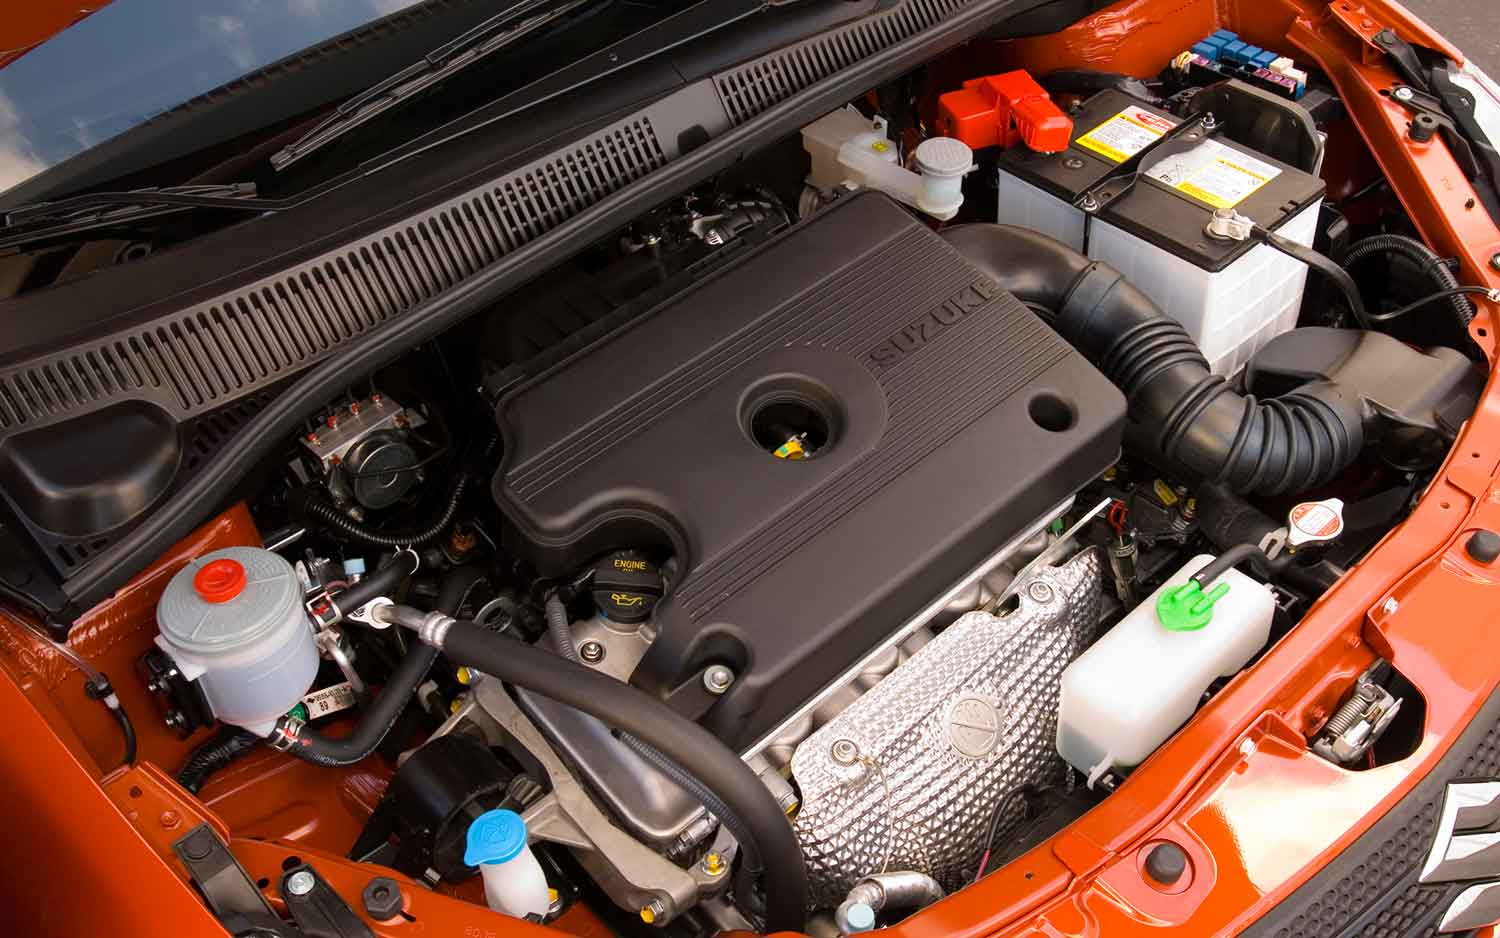 Suzuki SX4 disokong mesin berteknologi DOHC, VVT berkapasitas 1500 cc